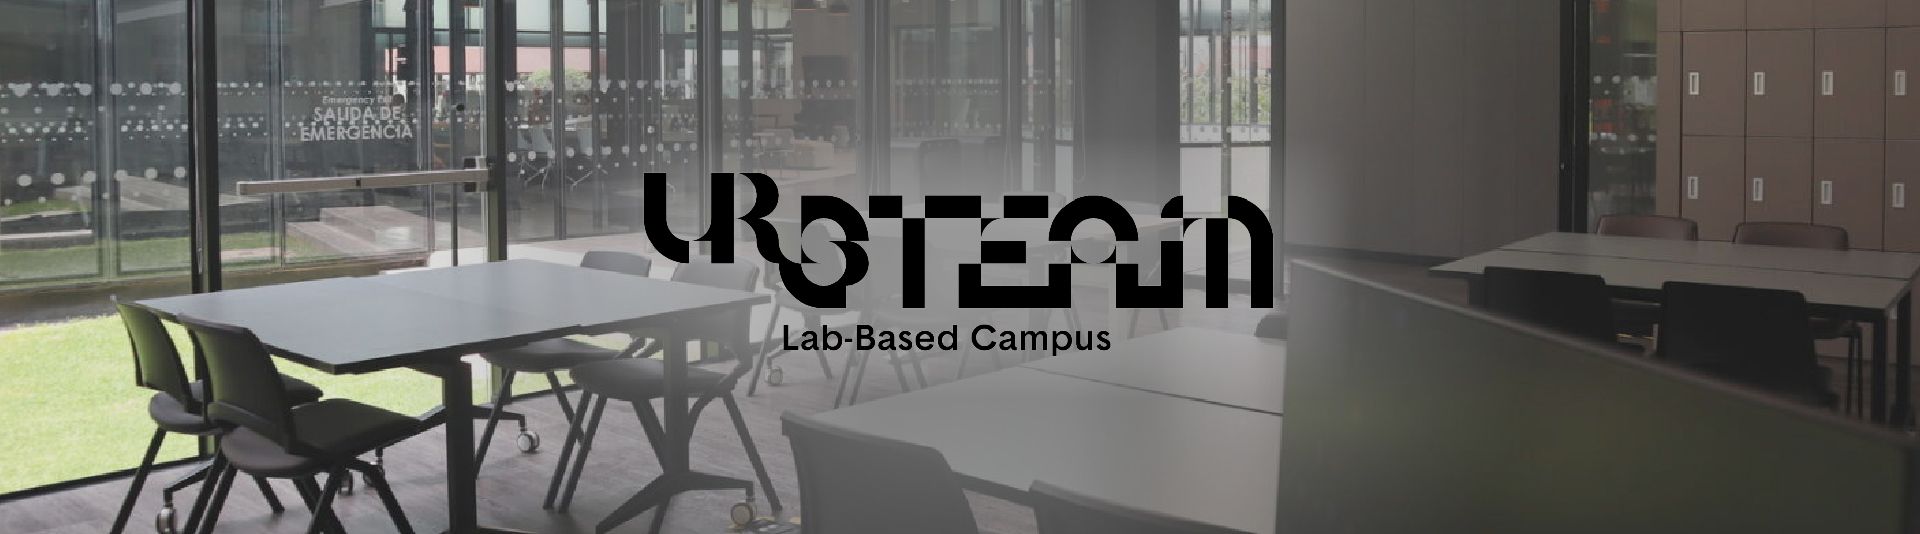 UR STEAM - Lab-Based Campus